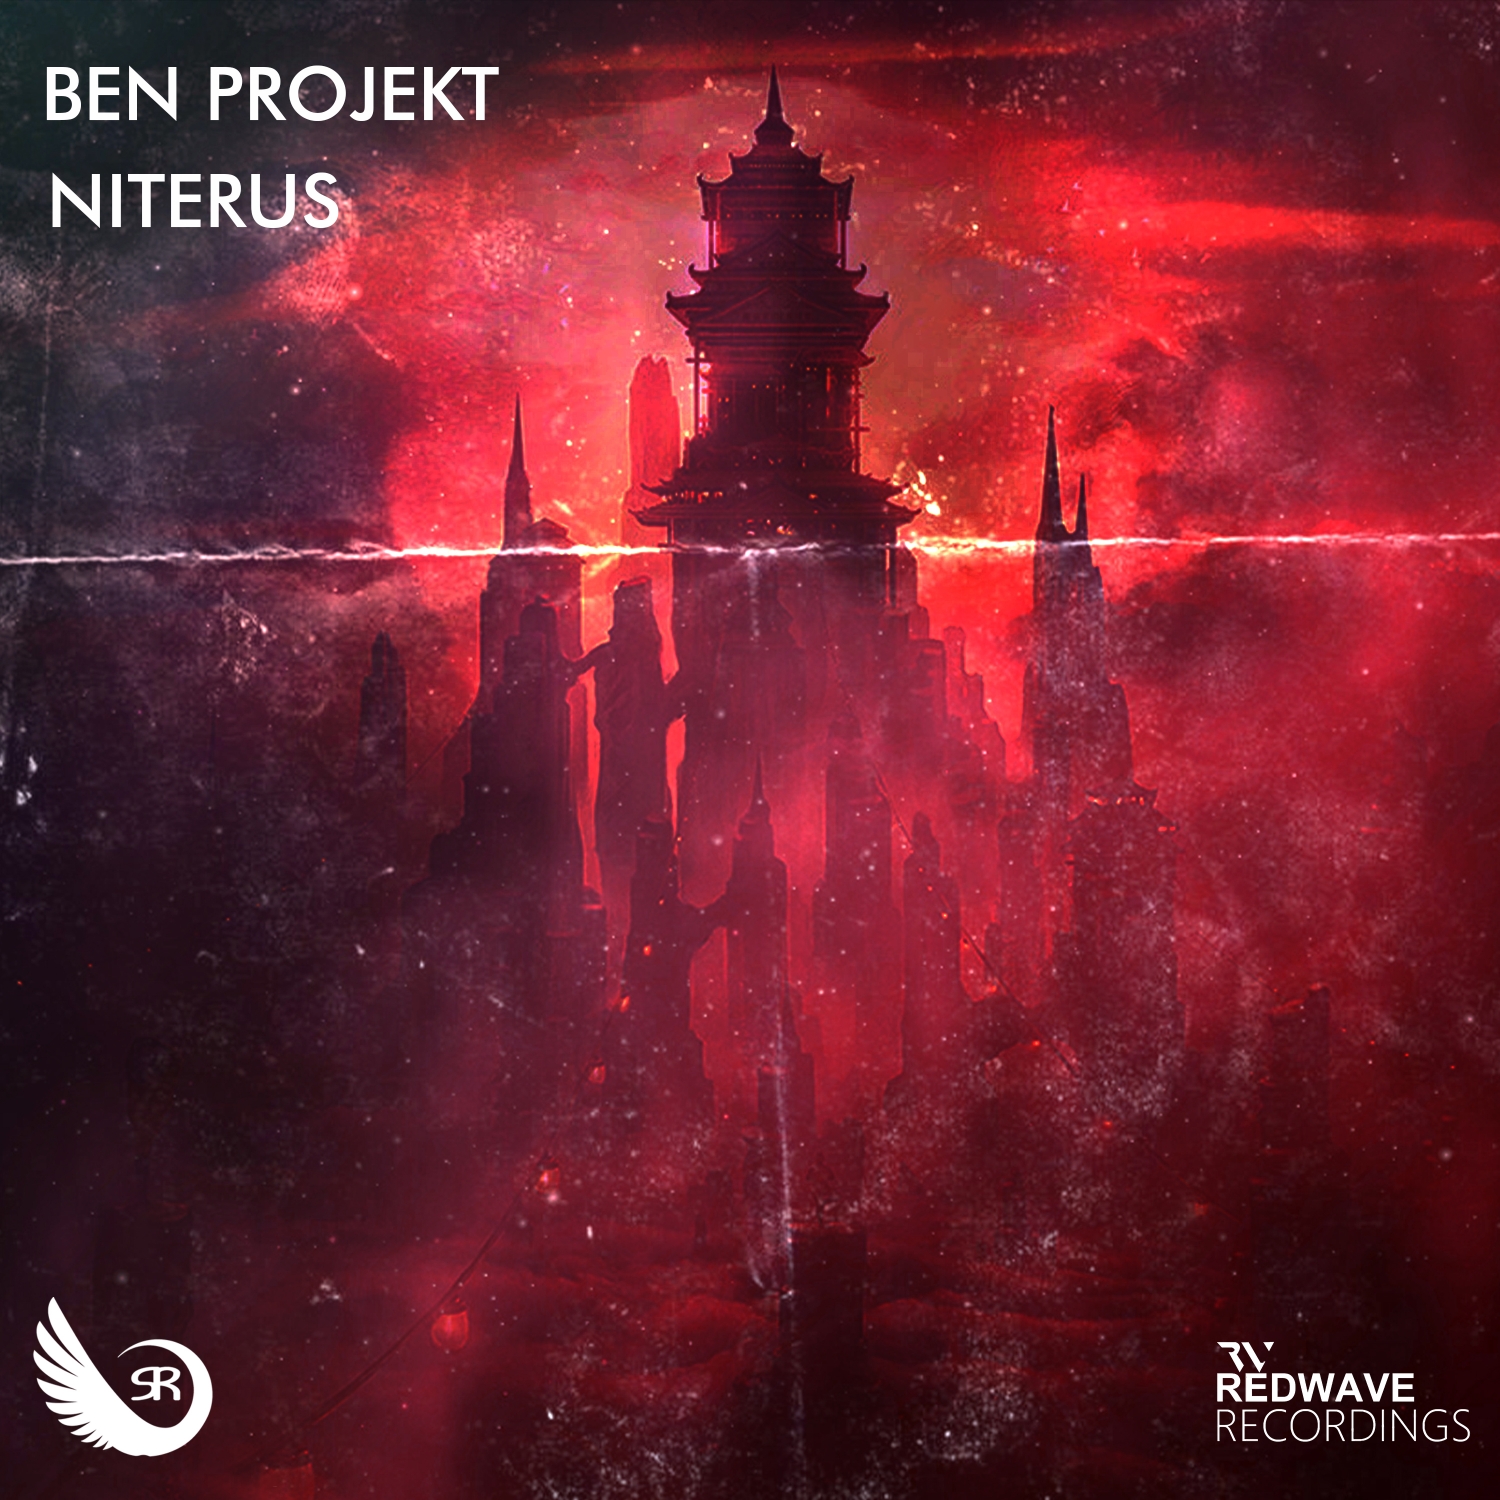 Ben Projekt presents Niterus on Sahara Recordings